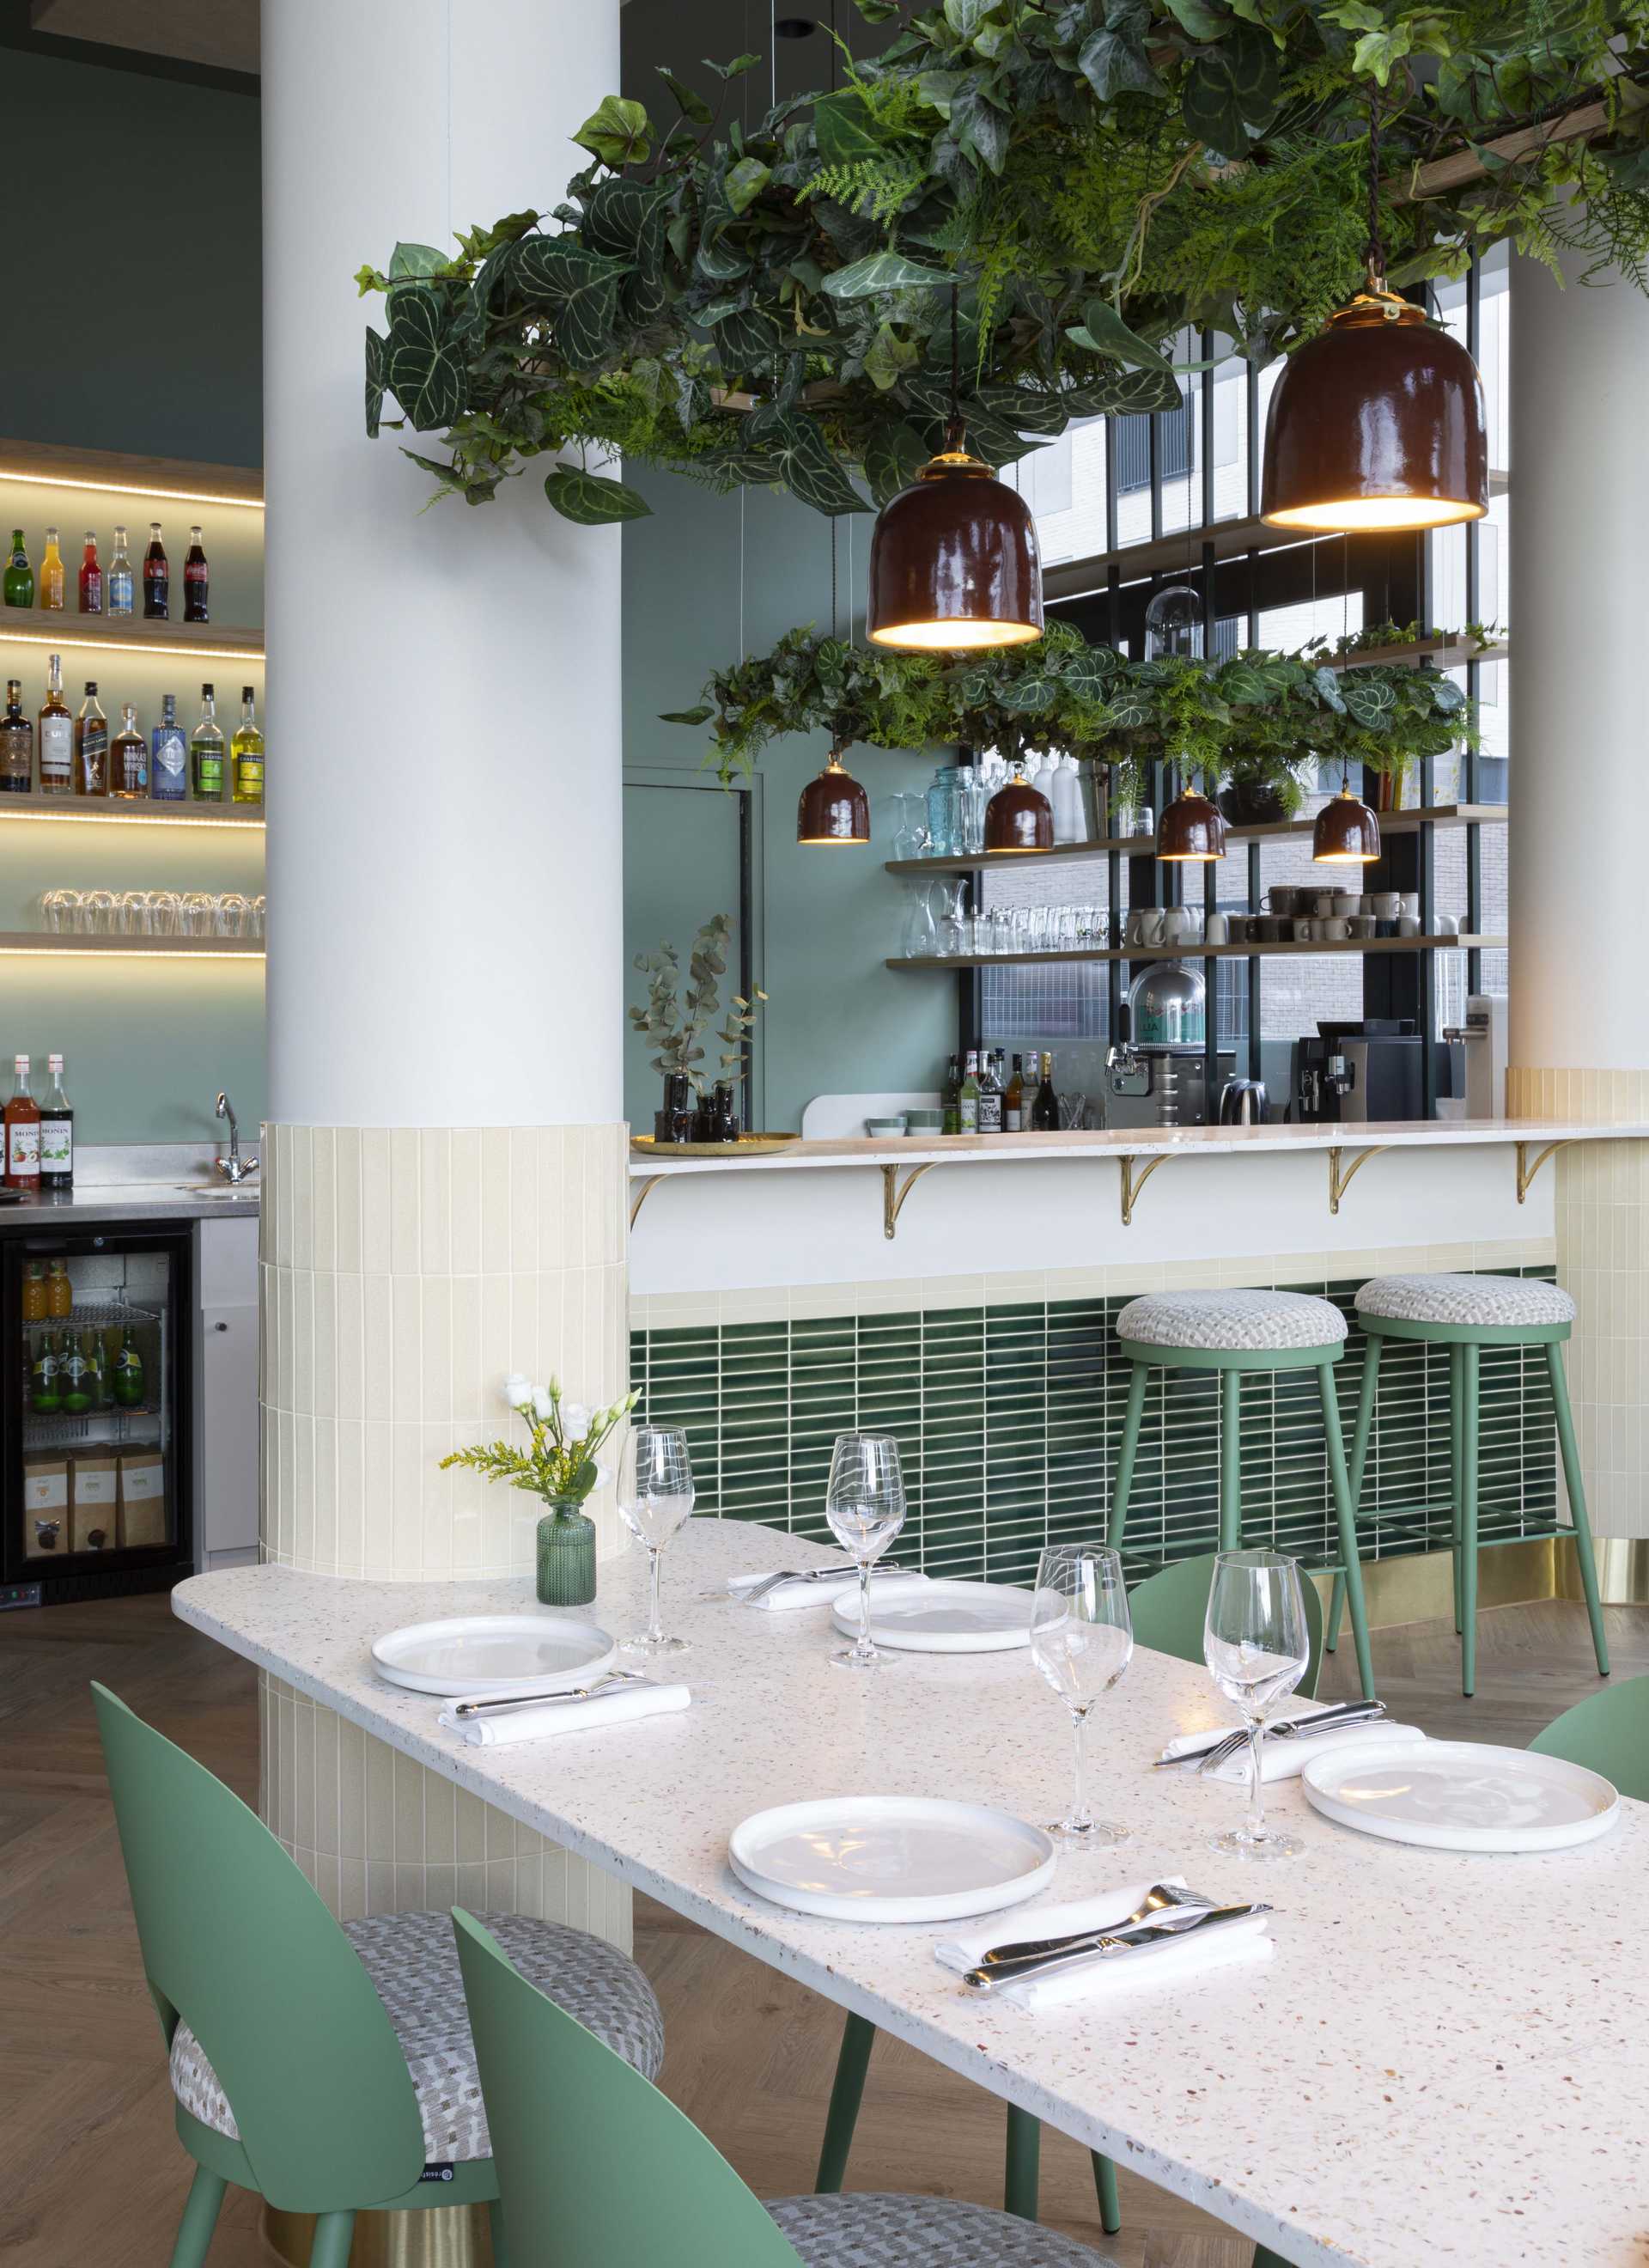 An architect designs a bistronomic restaurant in Nantes